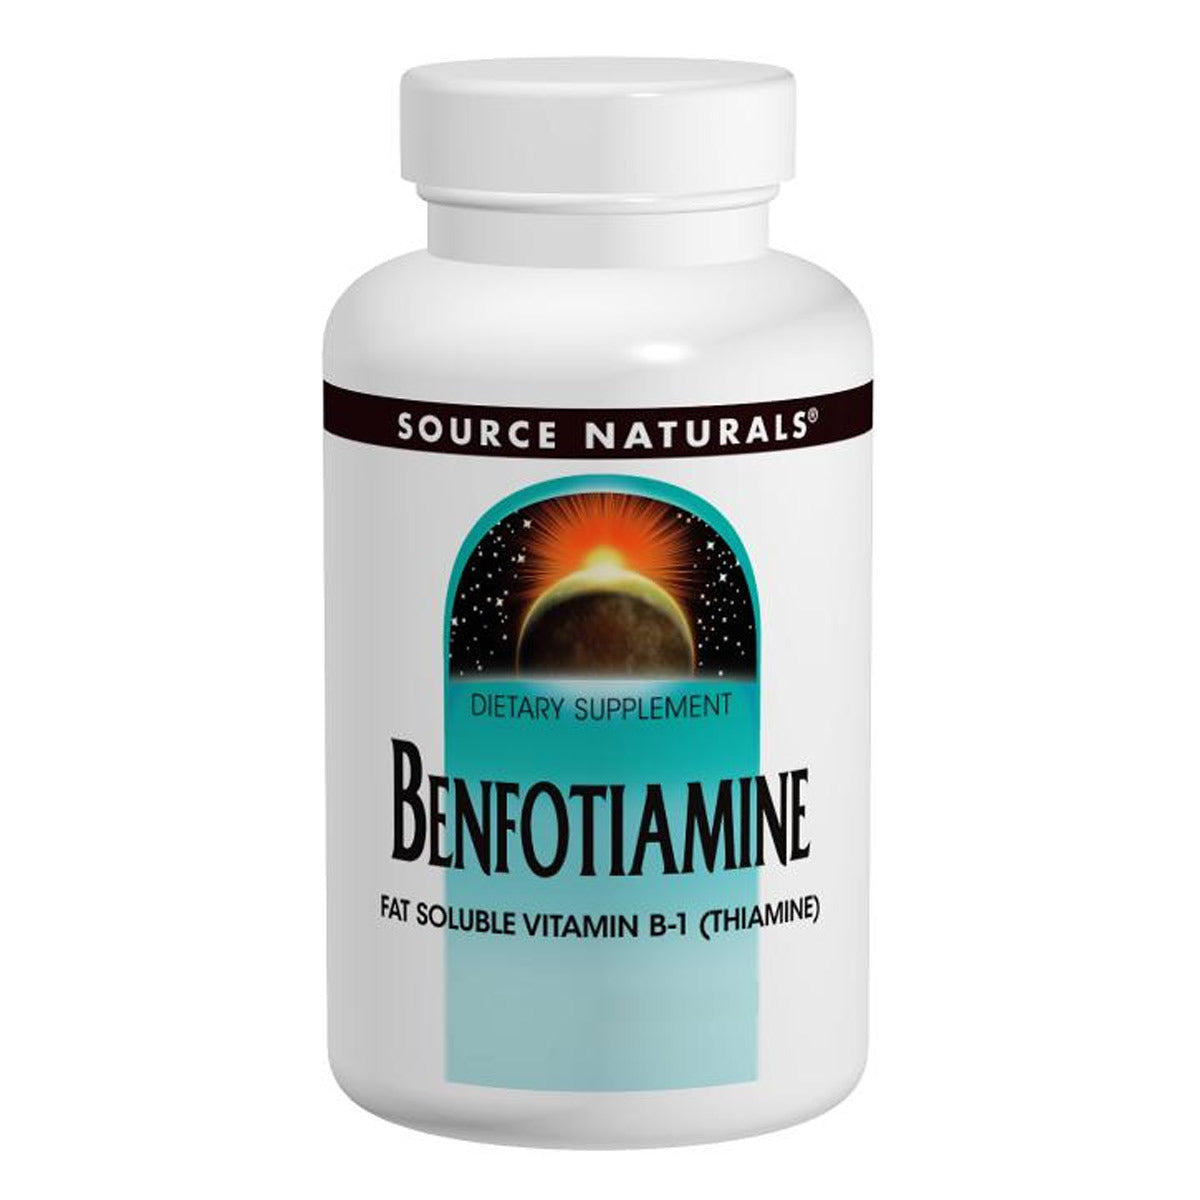 Primary image of Benfotiamine 150MG